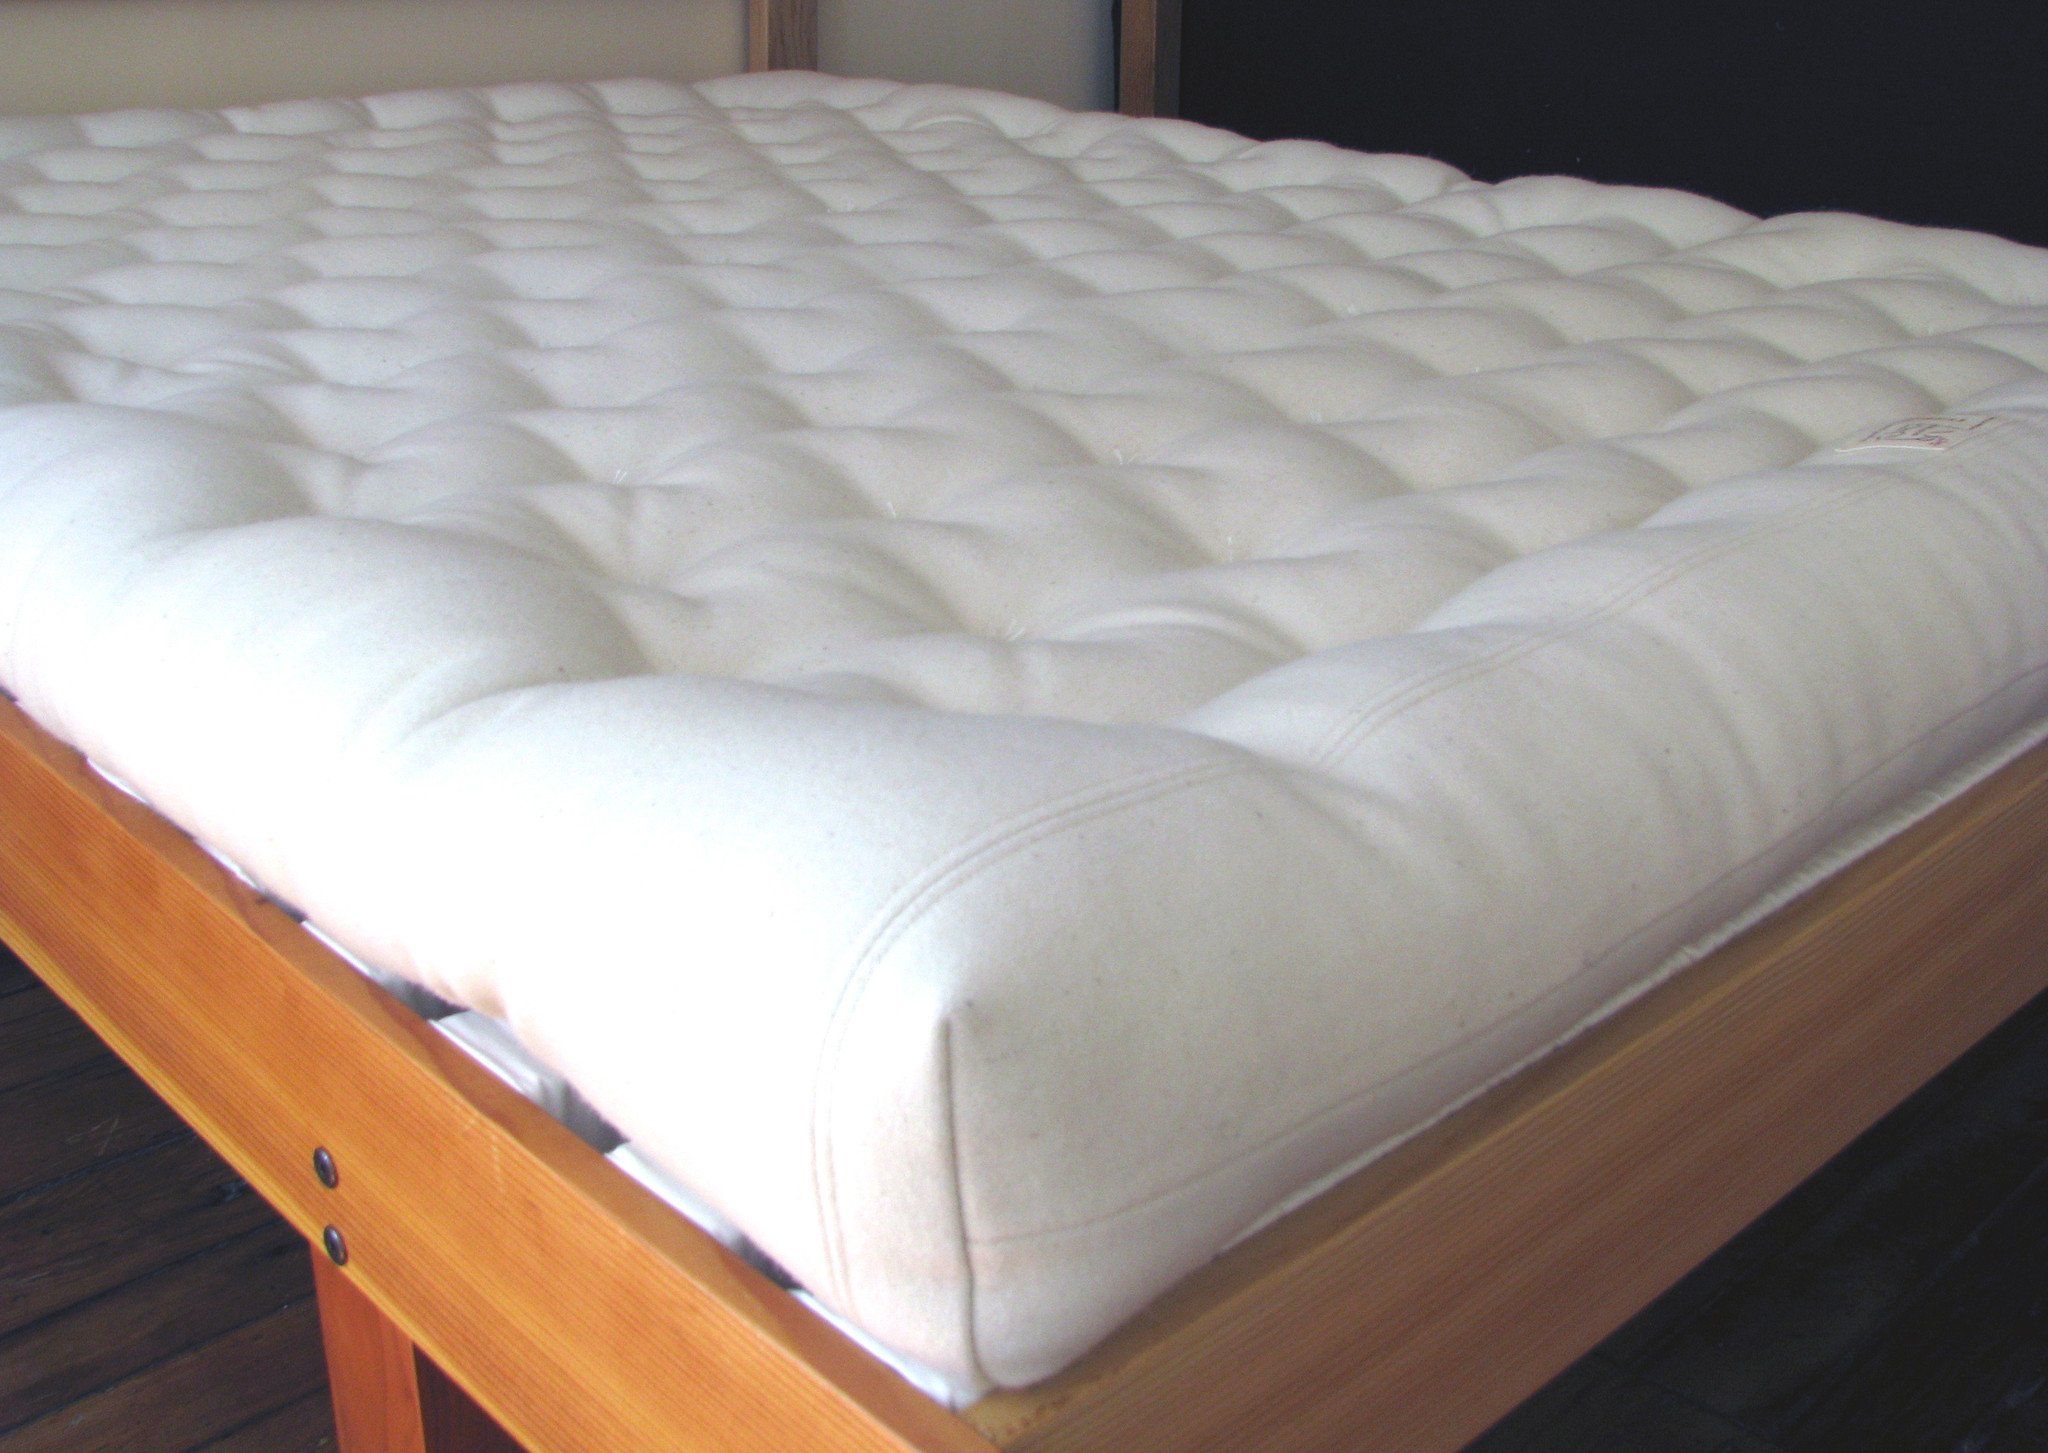 wool mattress 2 inches